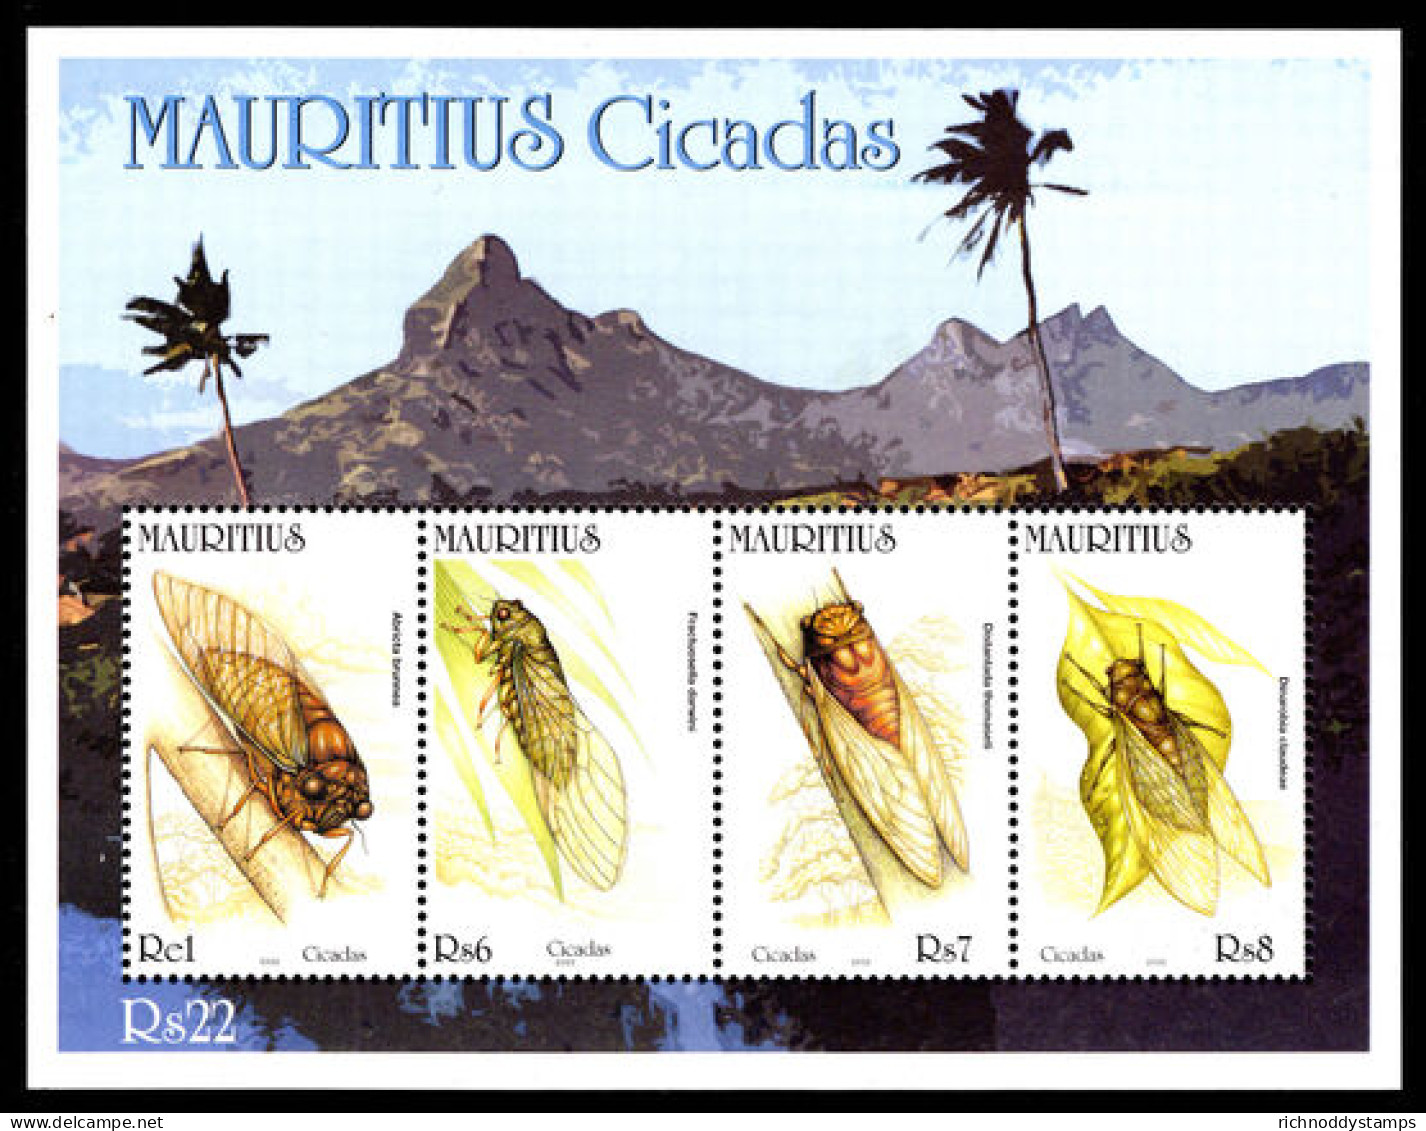 Mauritius 2002 Cicadas Souvenir Sheet Unmounted Mint. - Maurice (1968-...)